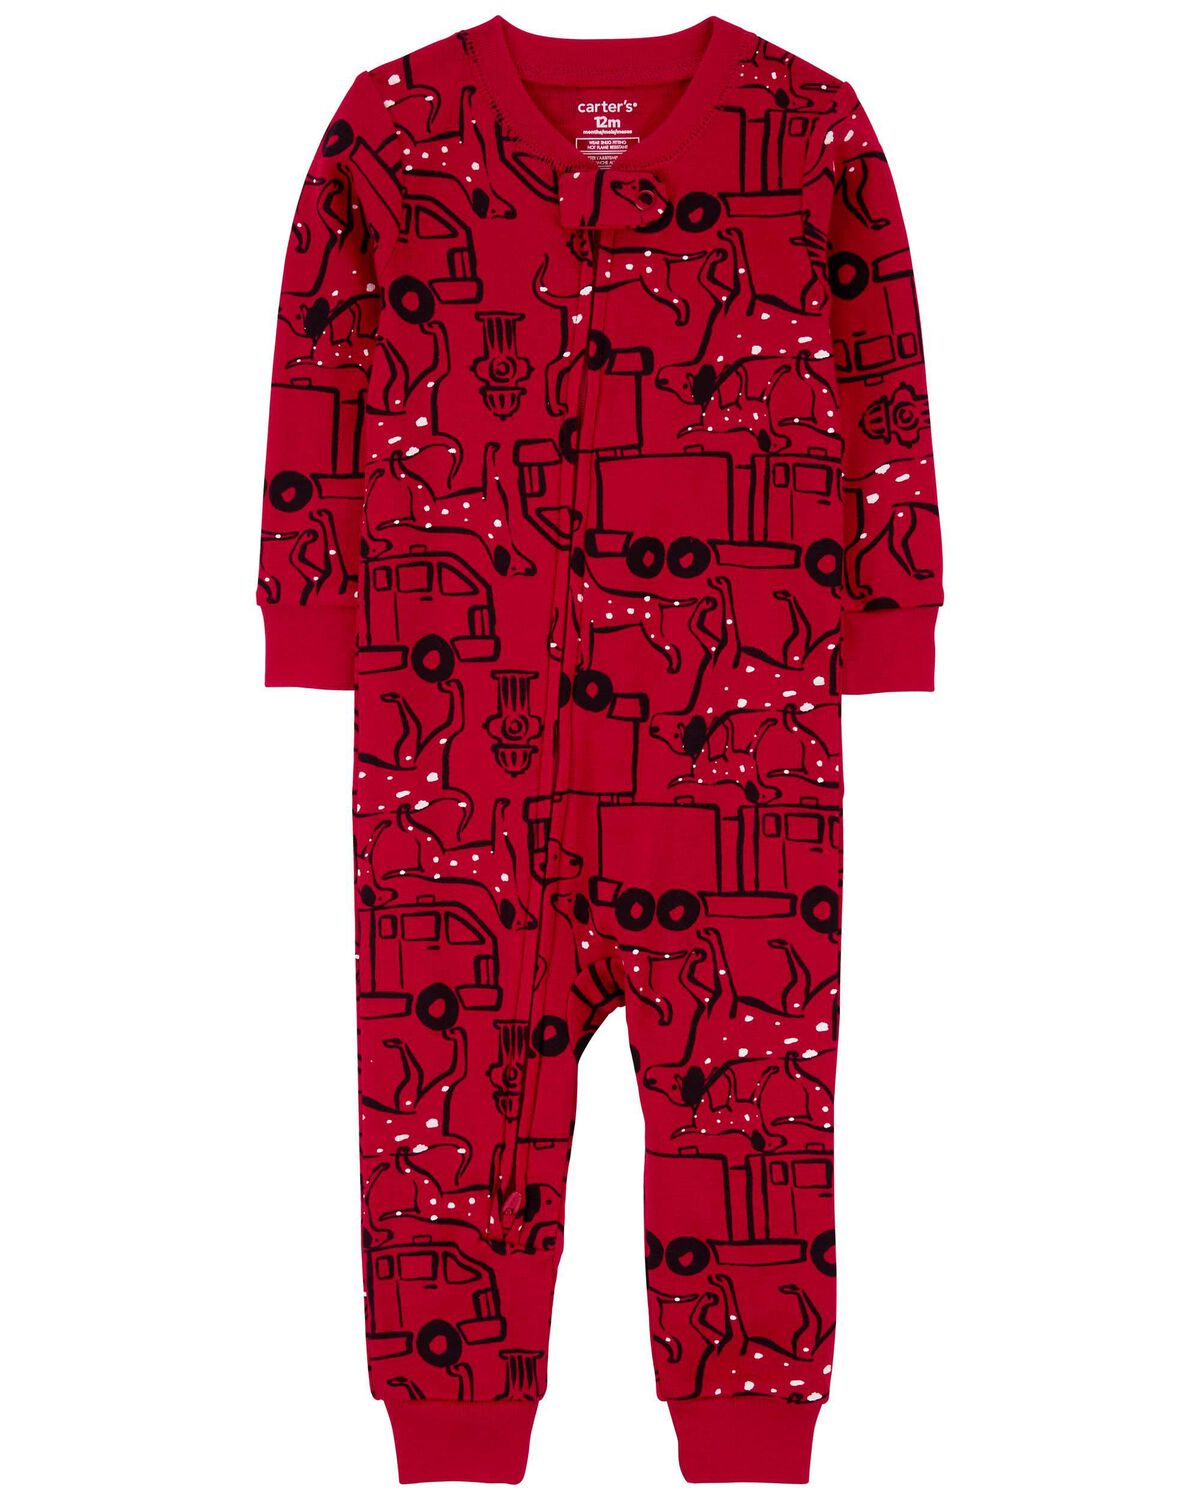 Baby 1-Piece Firetruck 100% Snug Fit Cotton Footless Pajamas